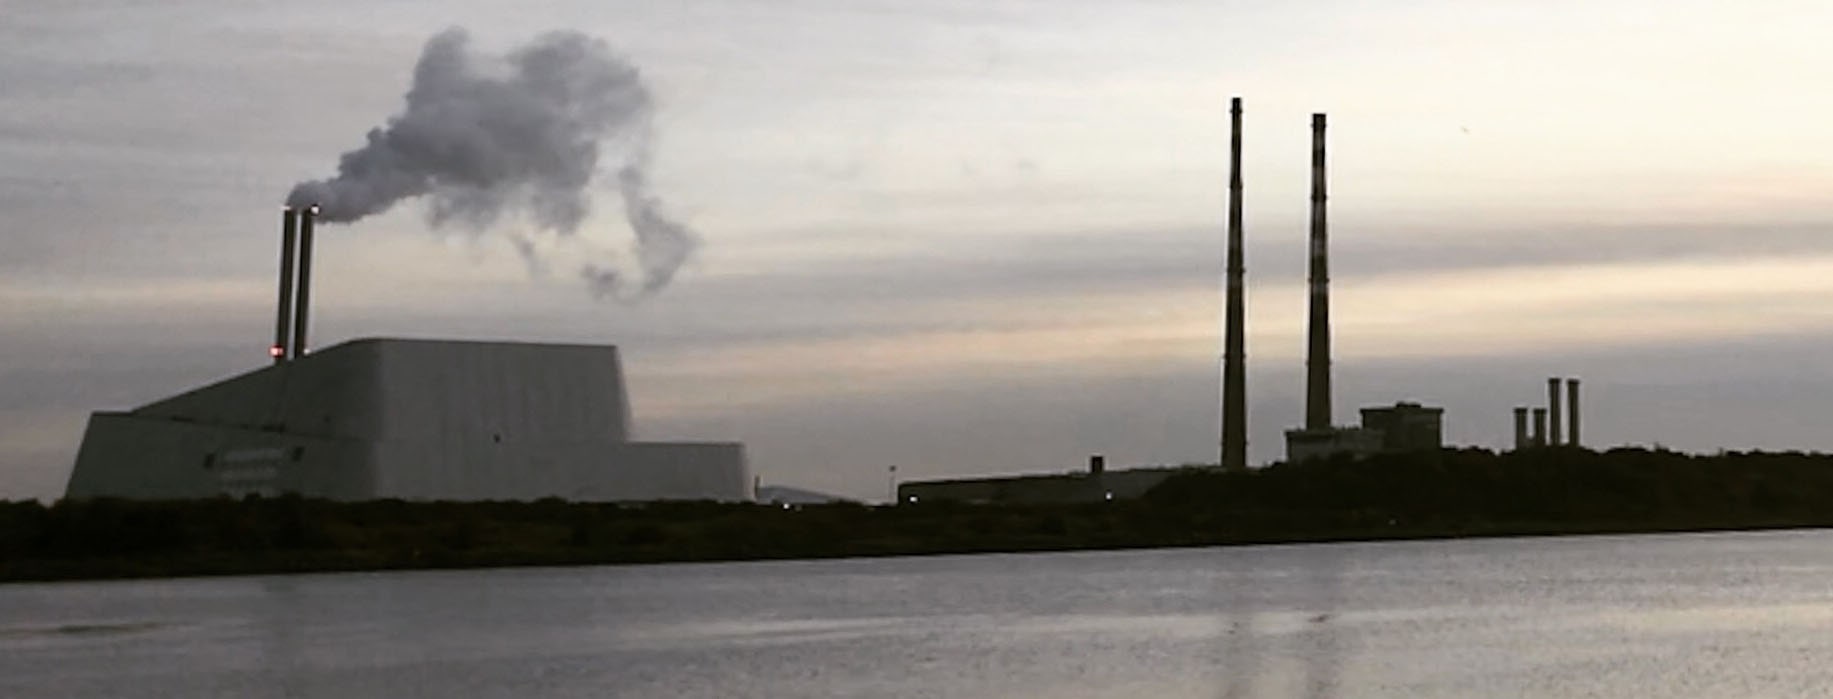 Dutch court tells Shell to cut emissions